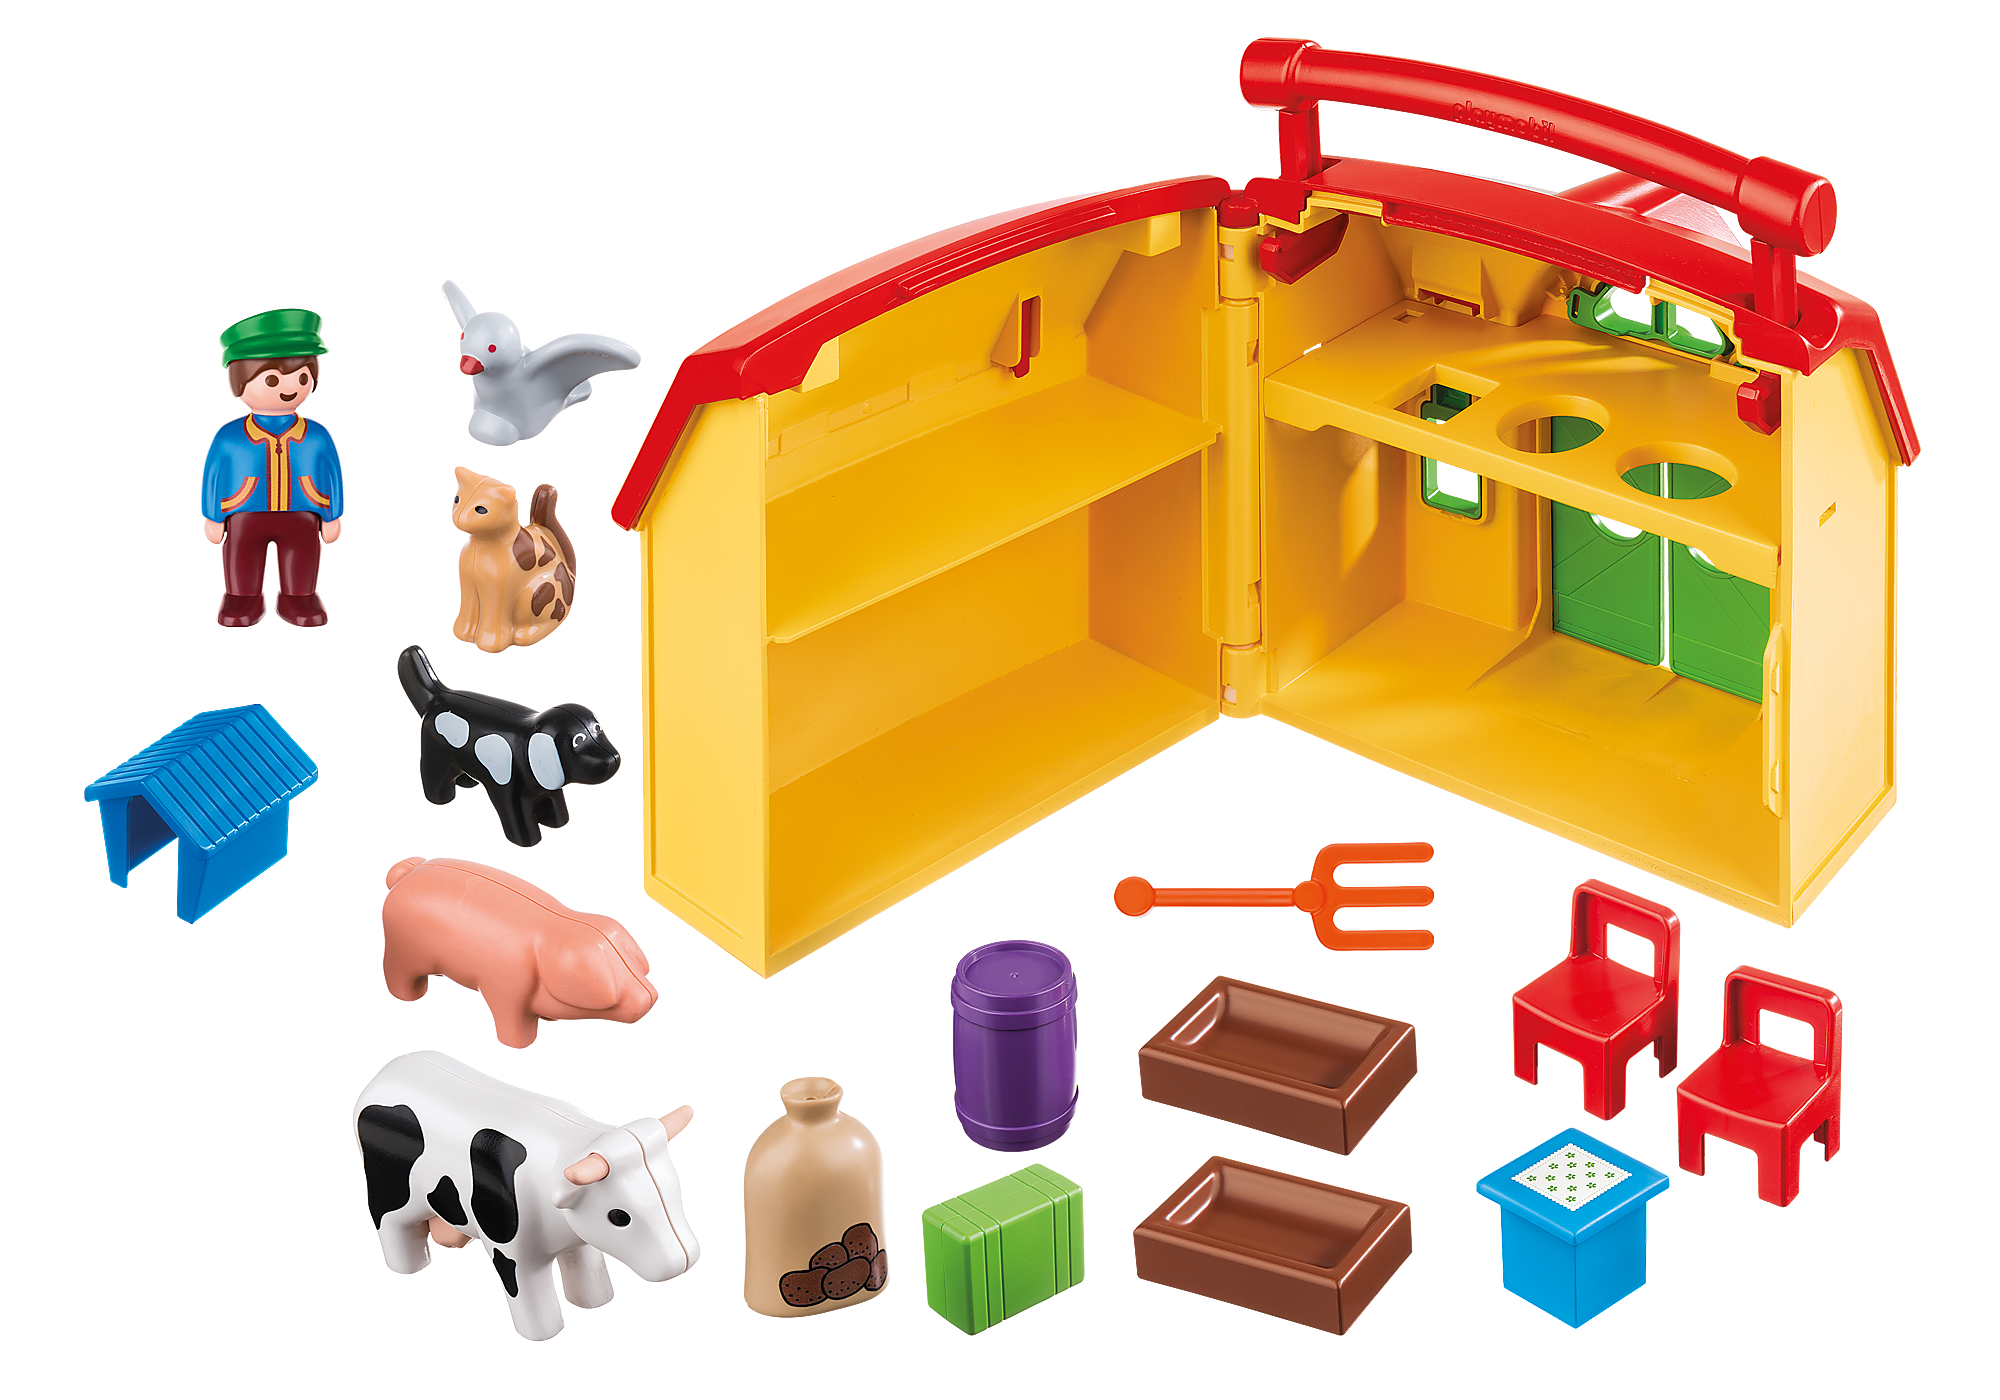 Playmobil 1.2.3. - 6962 - Ferme transportable avec animaux